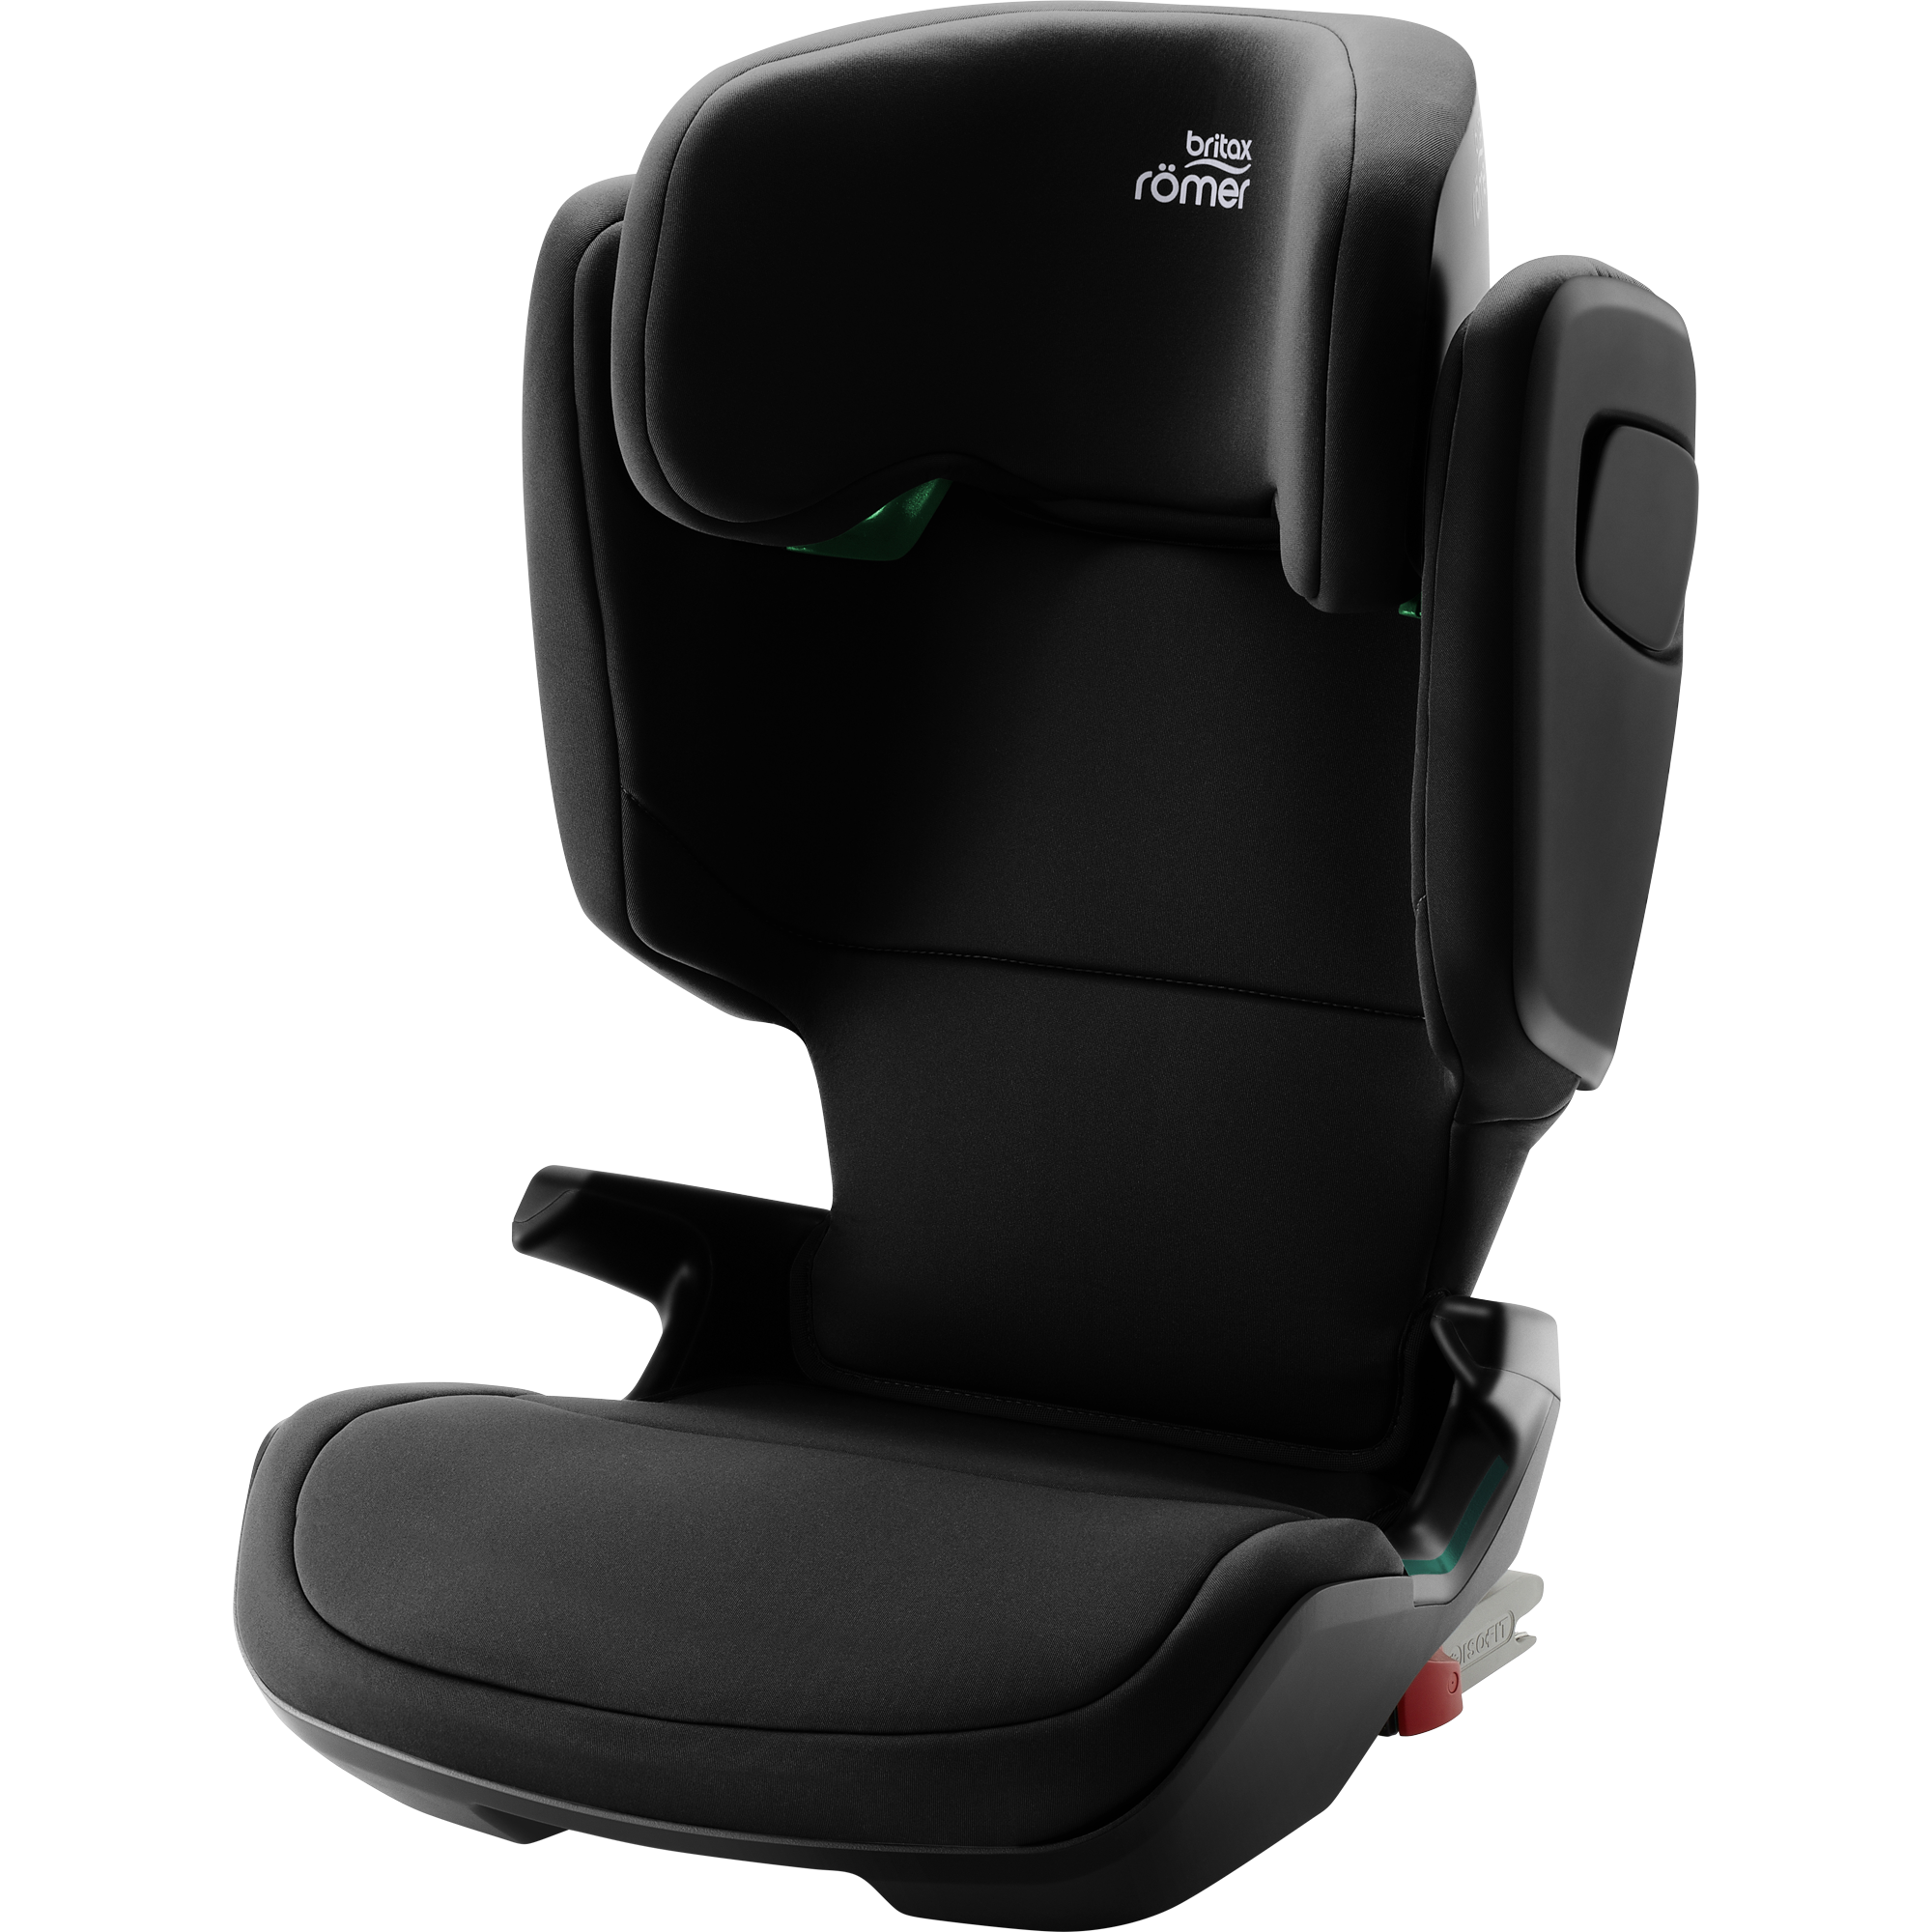 Housse siège auto confort compatible Kidfix III M/S Dark grey - Made in Bébé